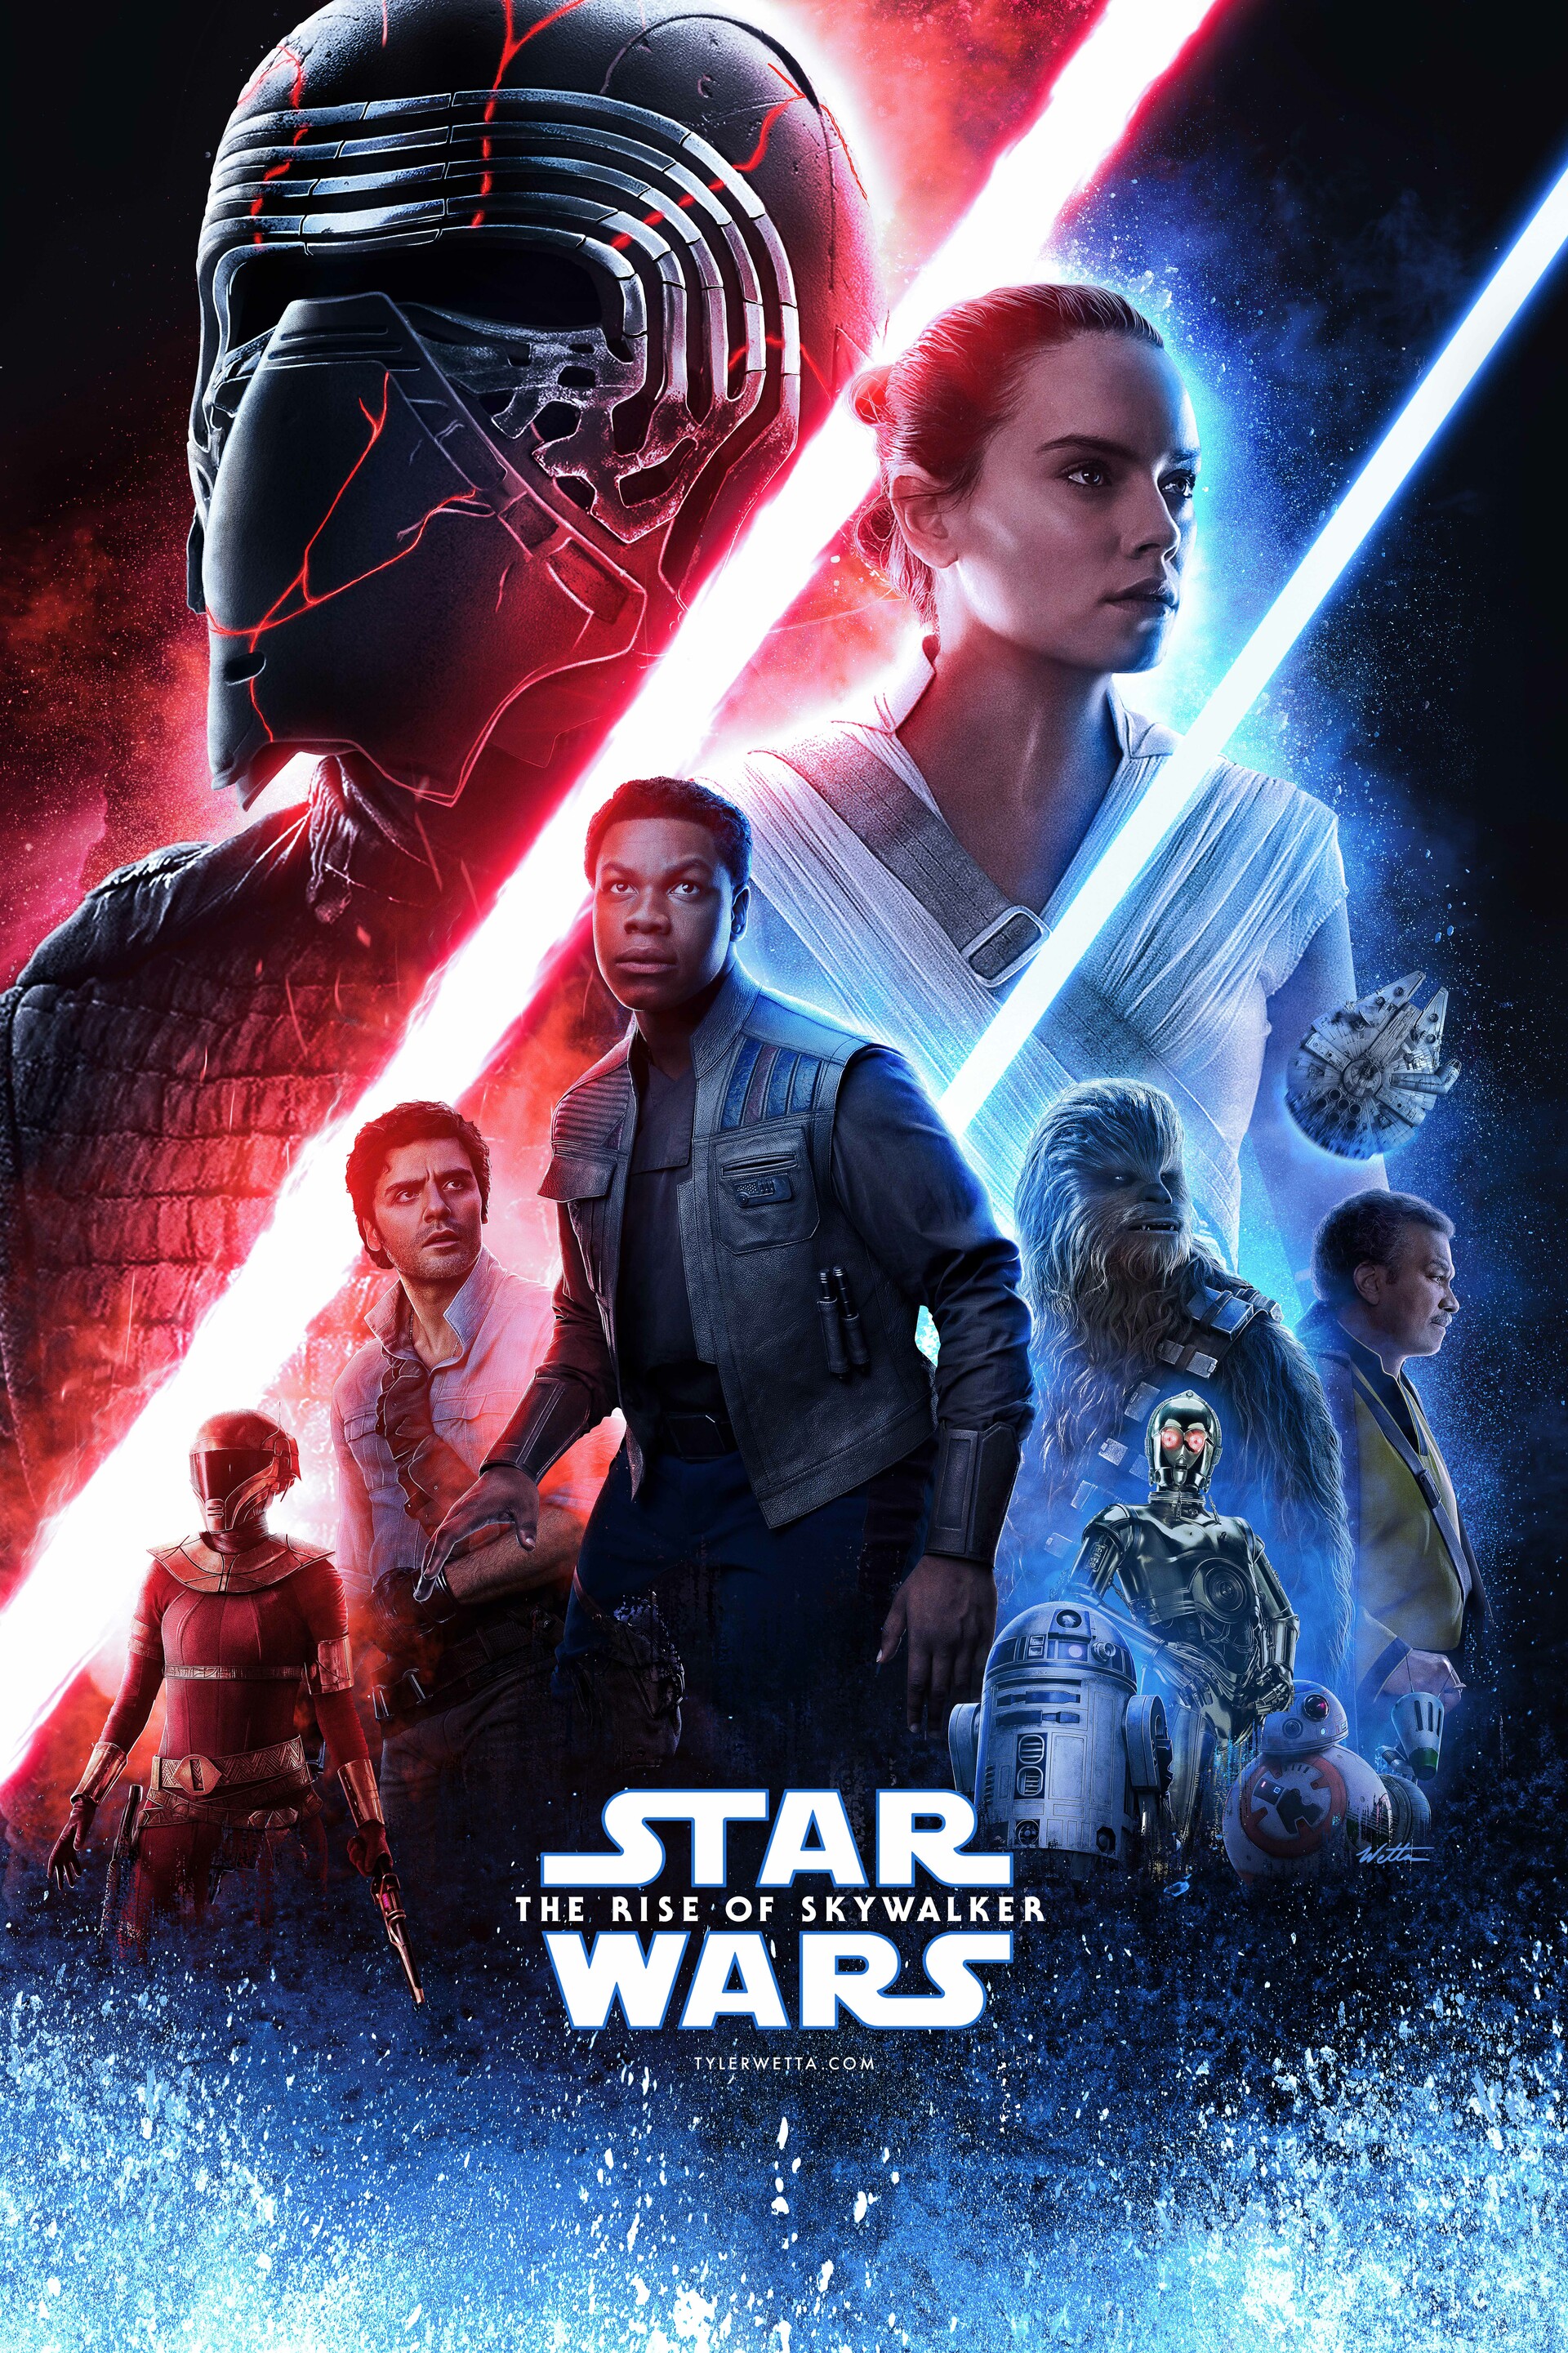 ArtStation - Star Wars - The Rise of Skywalker Poster